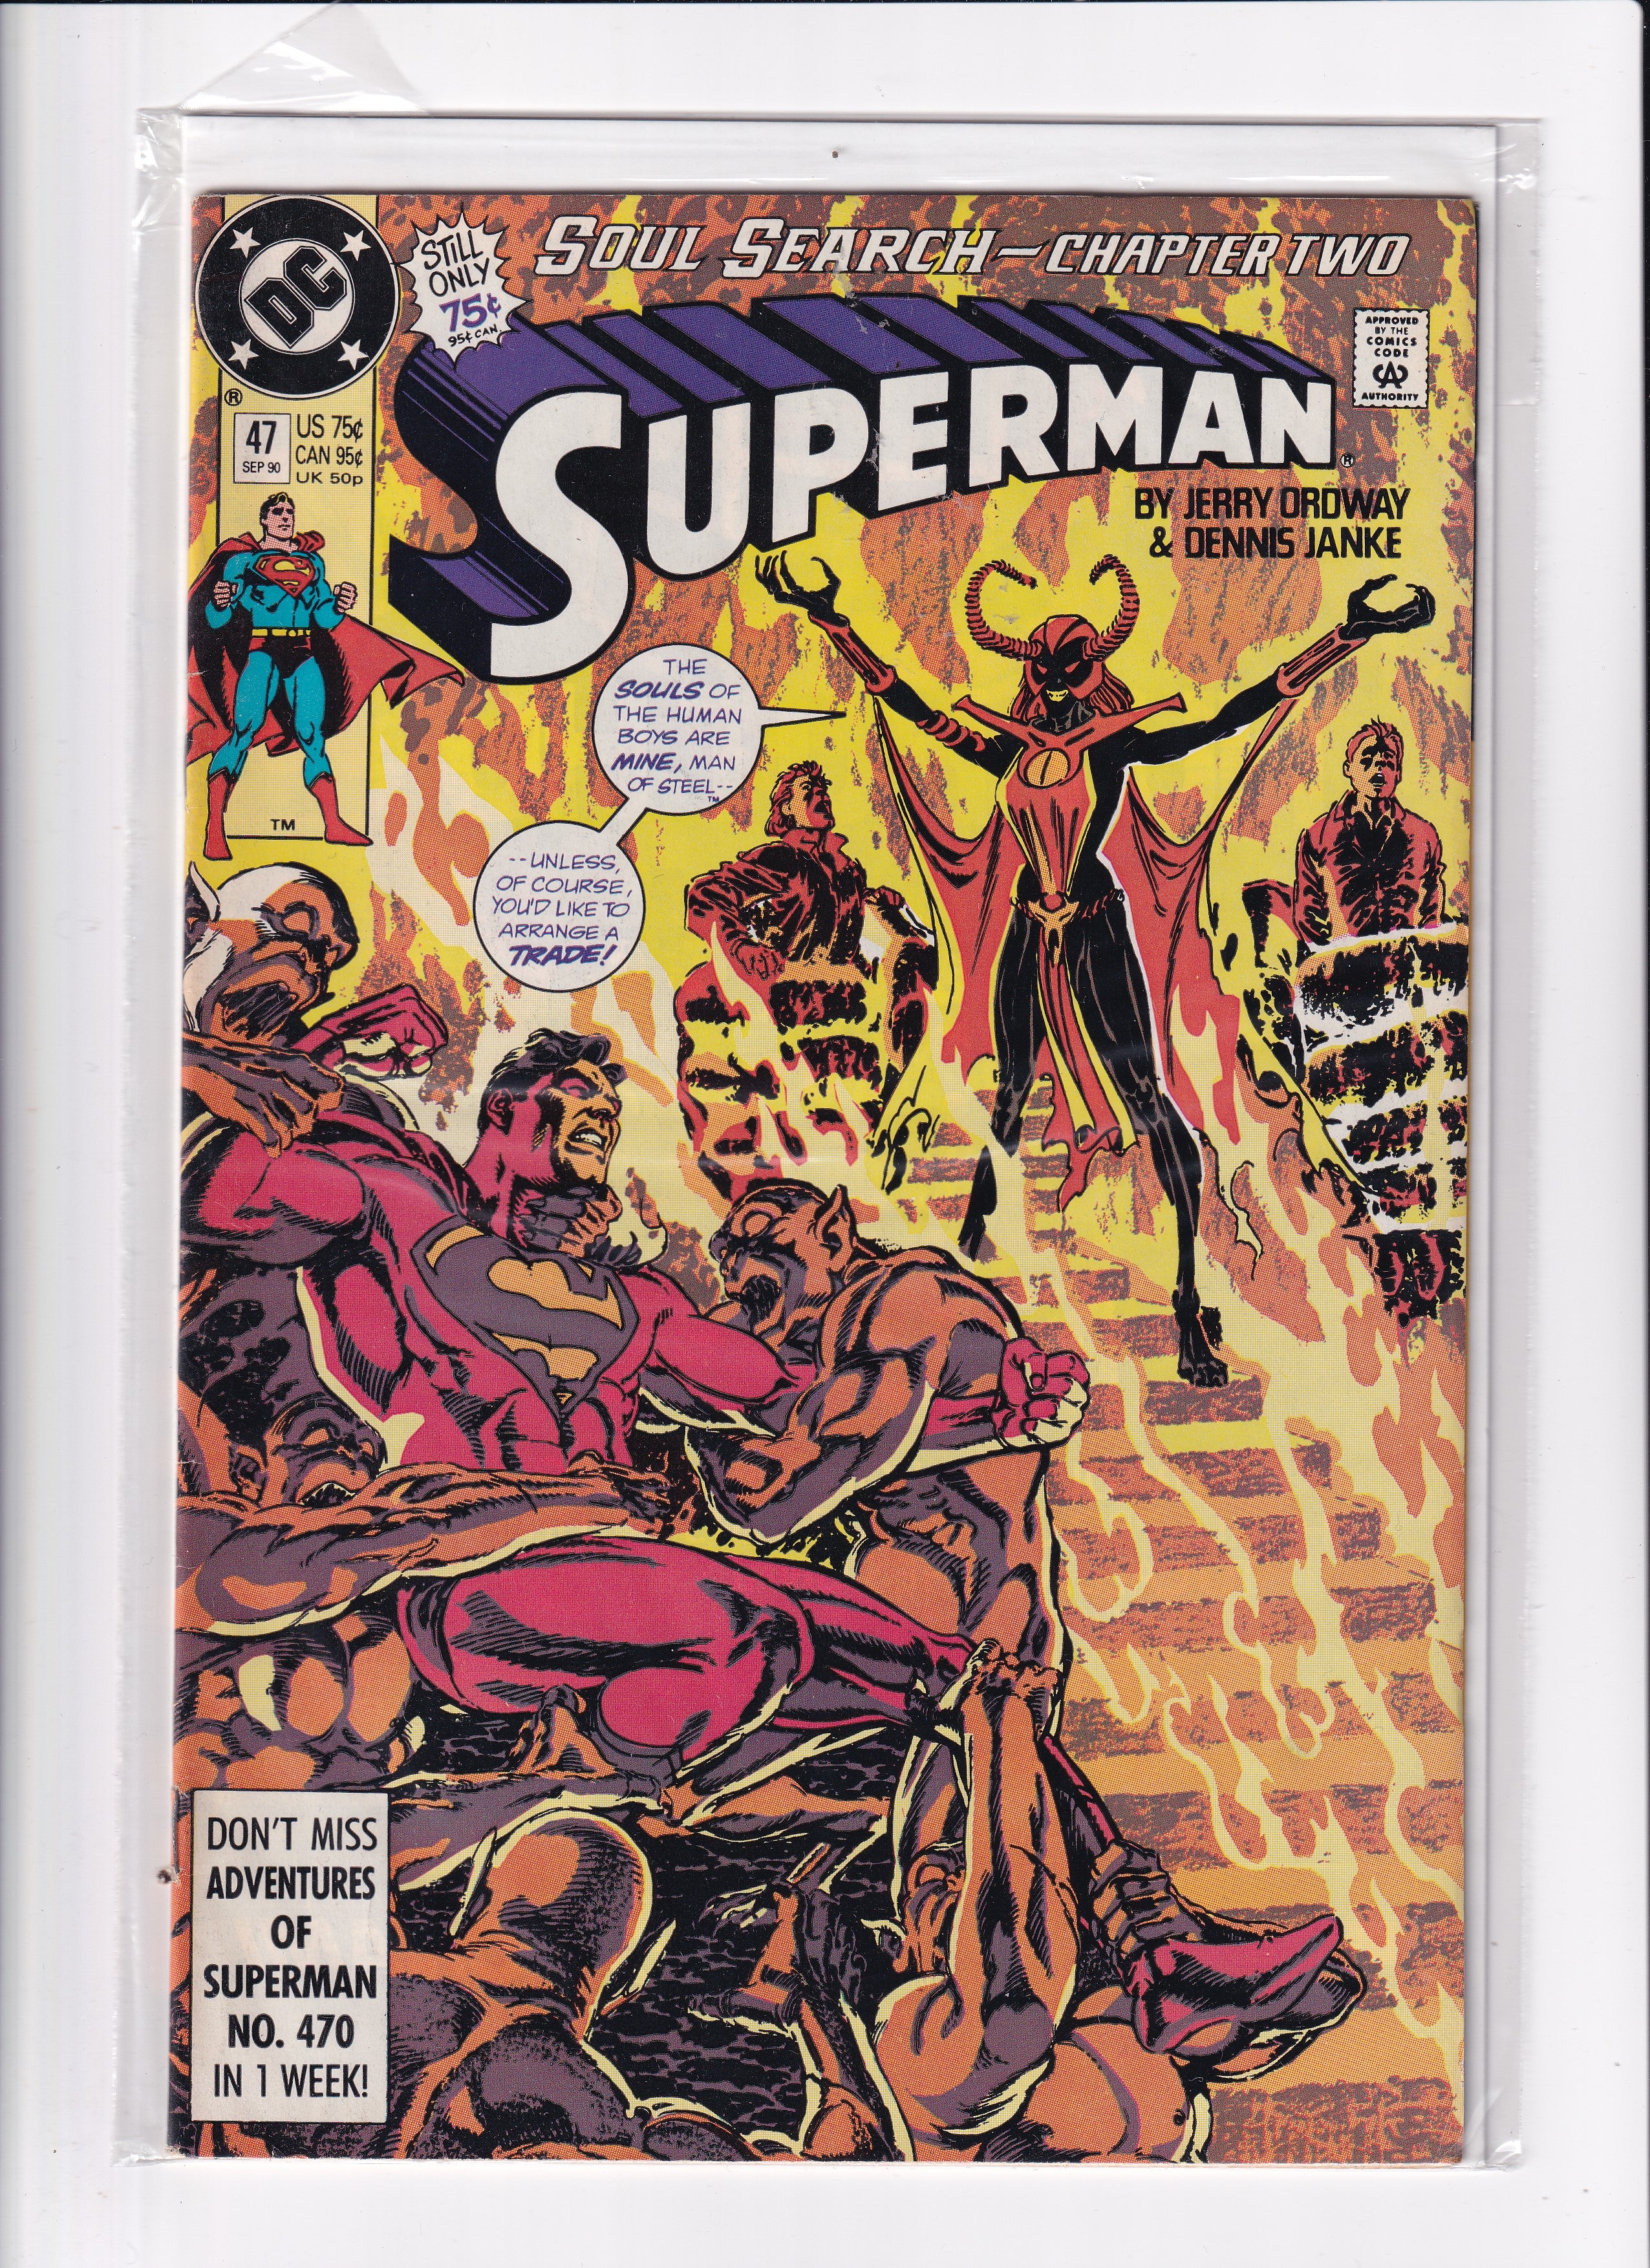 SUPERMAN #47 - Slab City Comics 